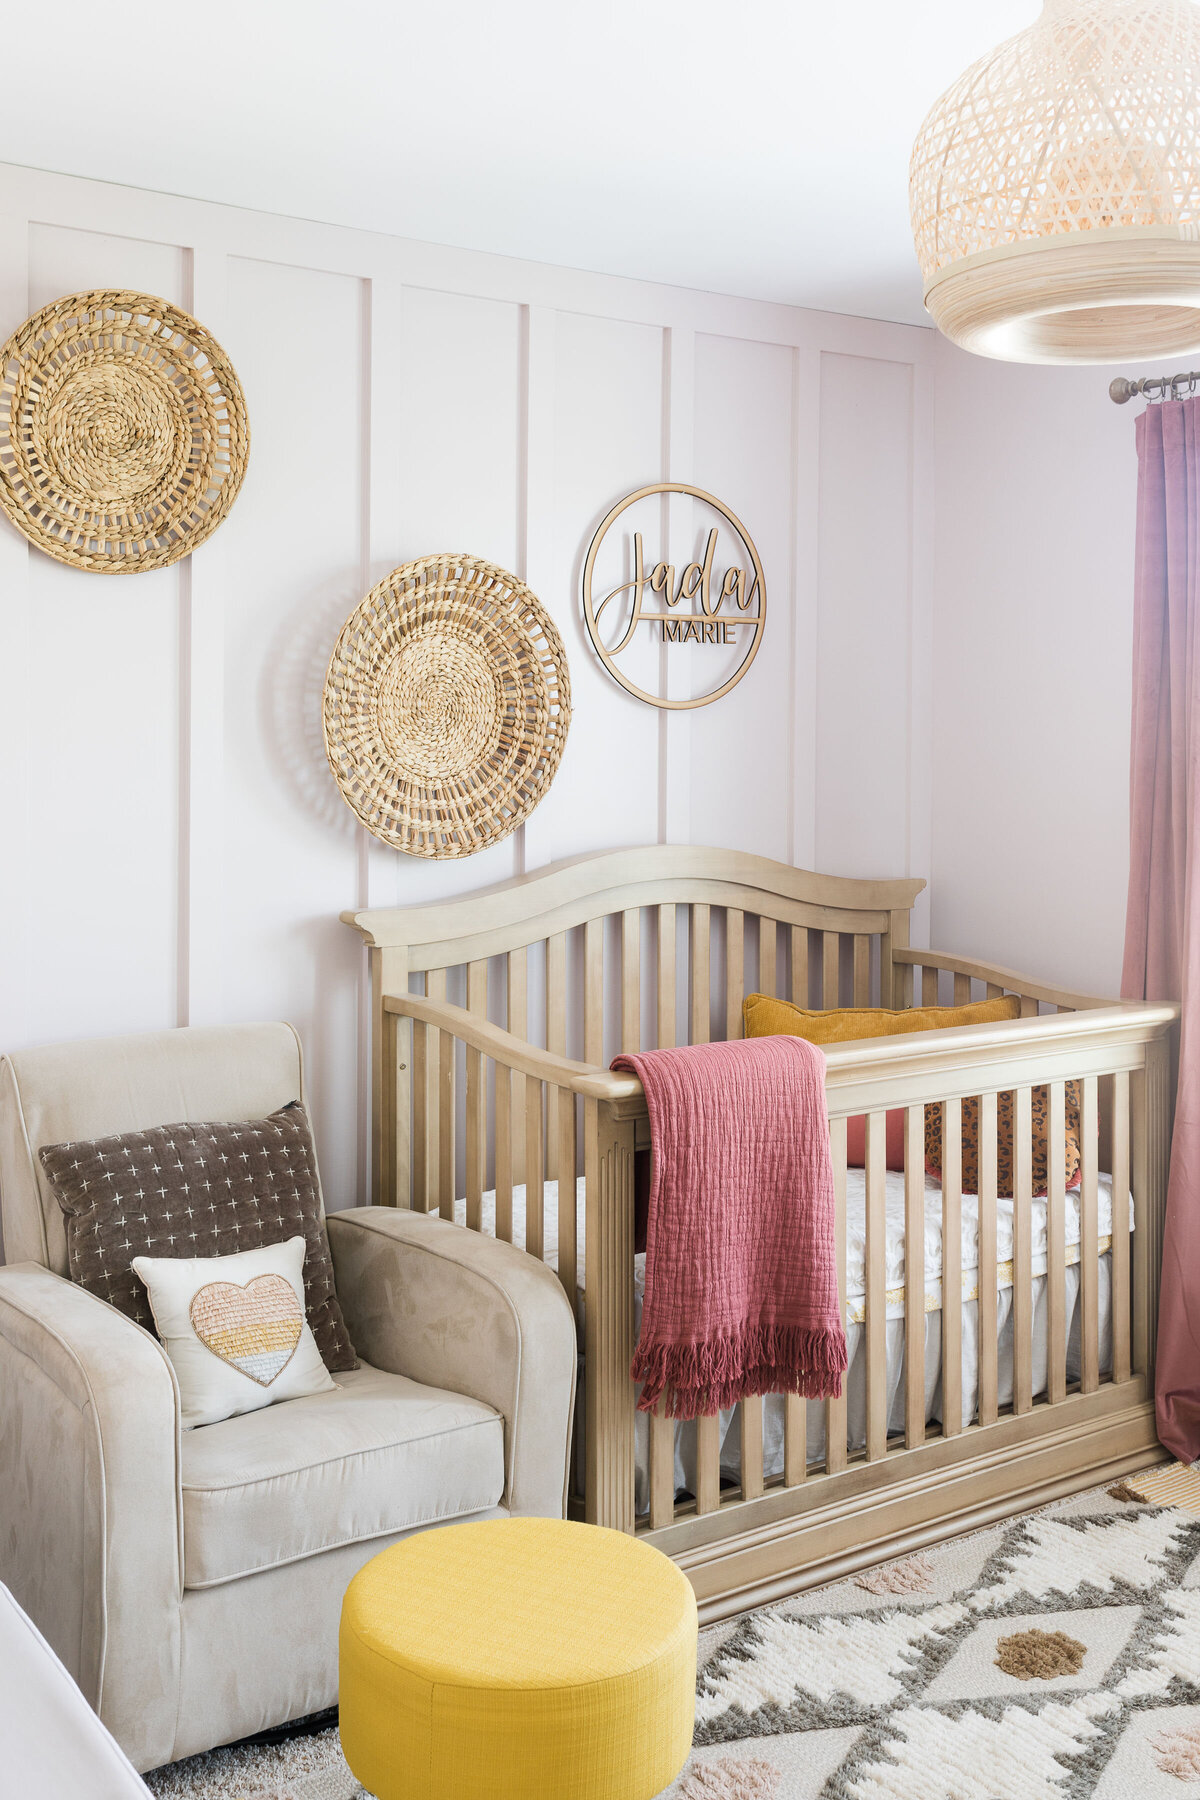 a crib, rocking chair, and artwork in a nursery